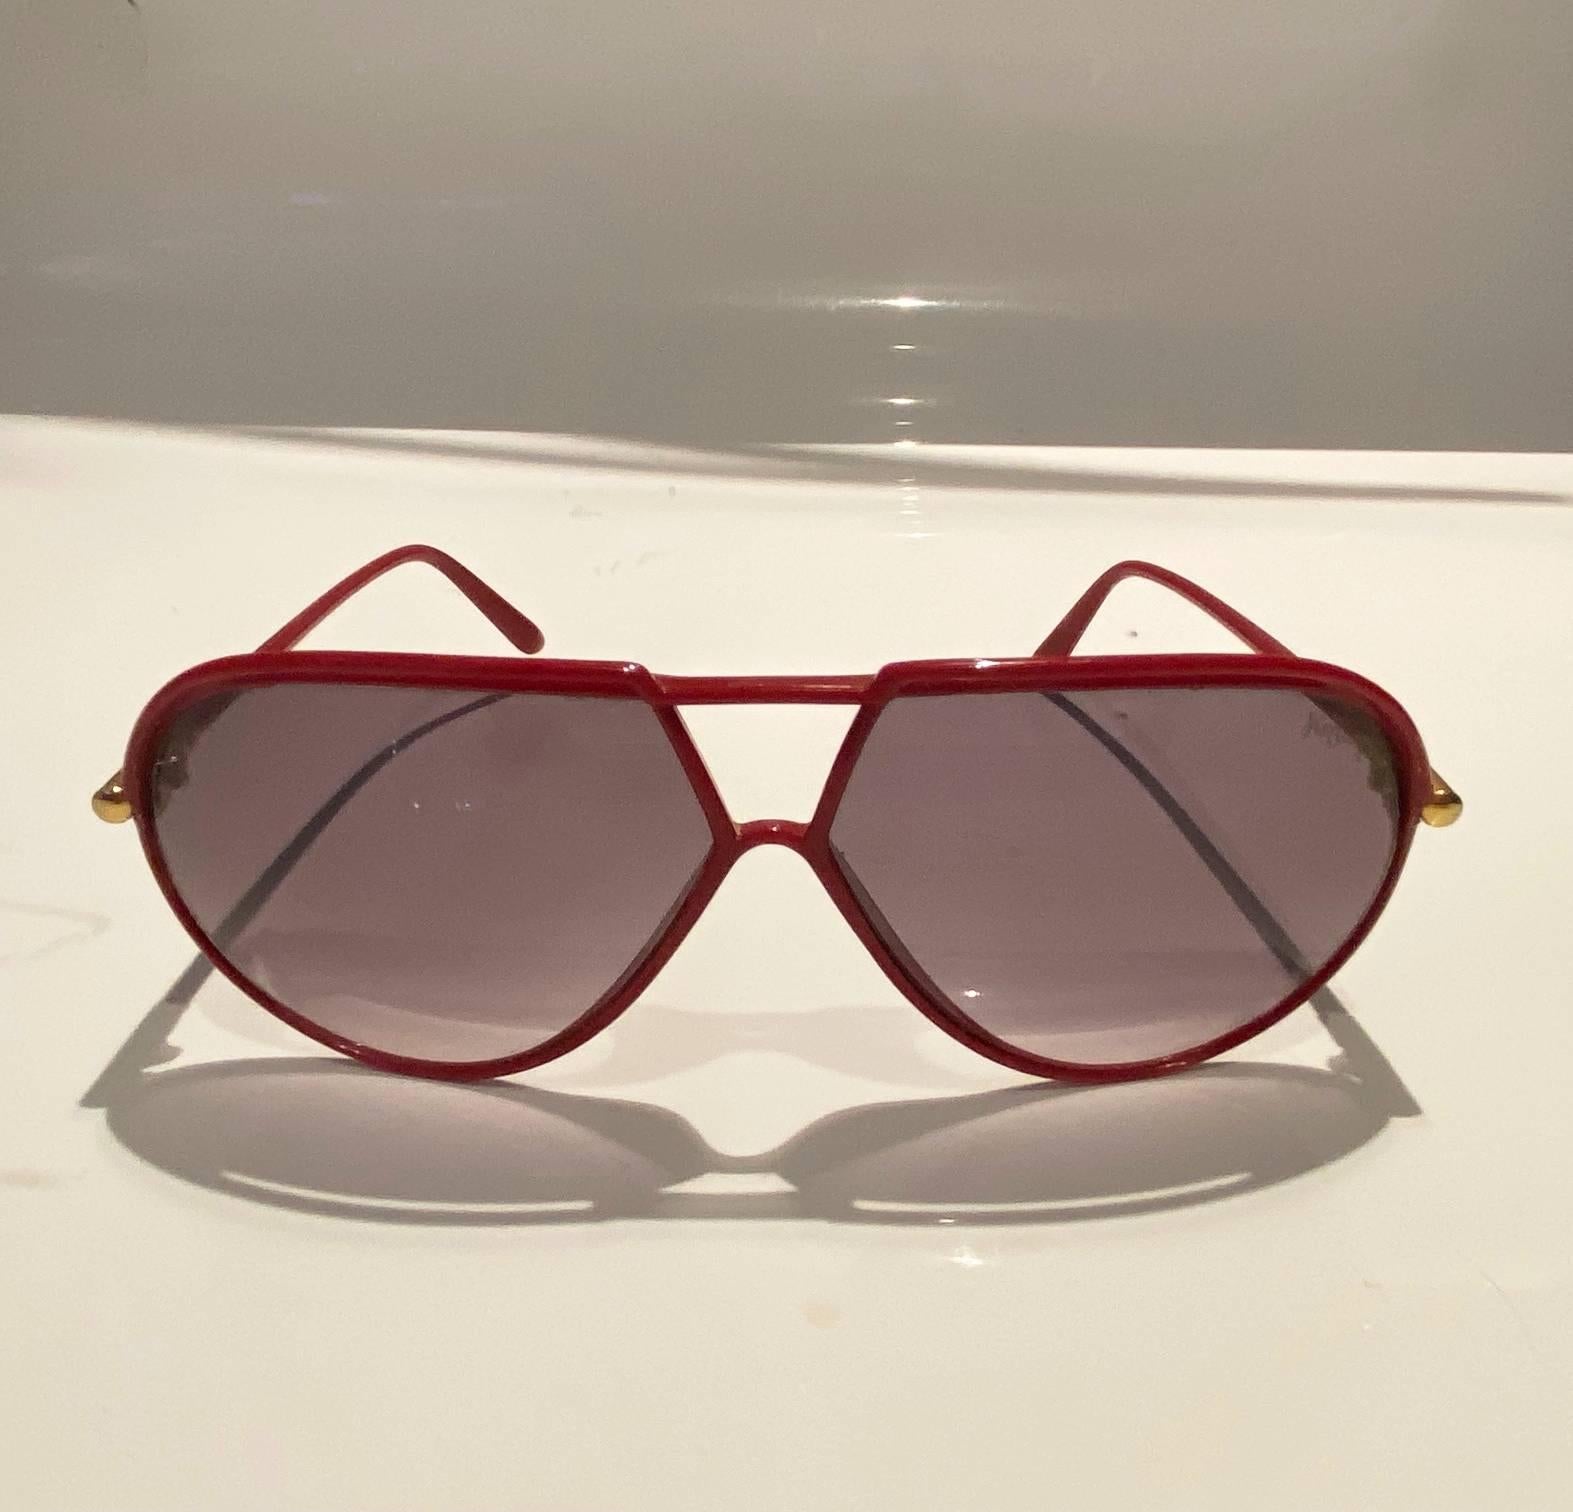 Yves Saint Laurent Red Teardrop Sunglasses, Red plastic frame, Brown lenses, gold tone metalware, logo plaque on temple 

Condition: 1980s, very good, no original box 

Measurements: 
- total width: 15cm/5.8in 
- bridge distance: 2.5cm/1in 
- lens